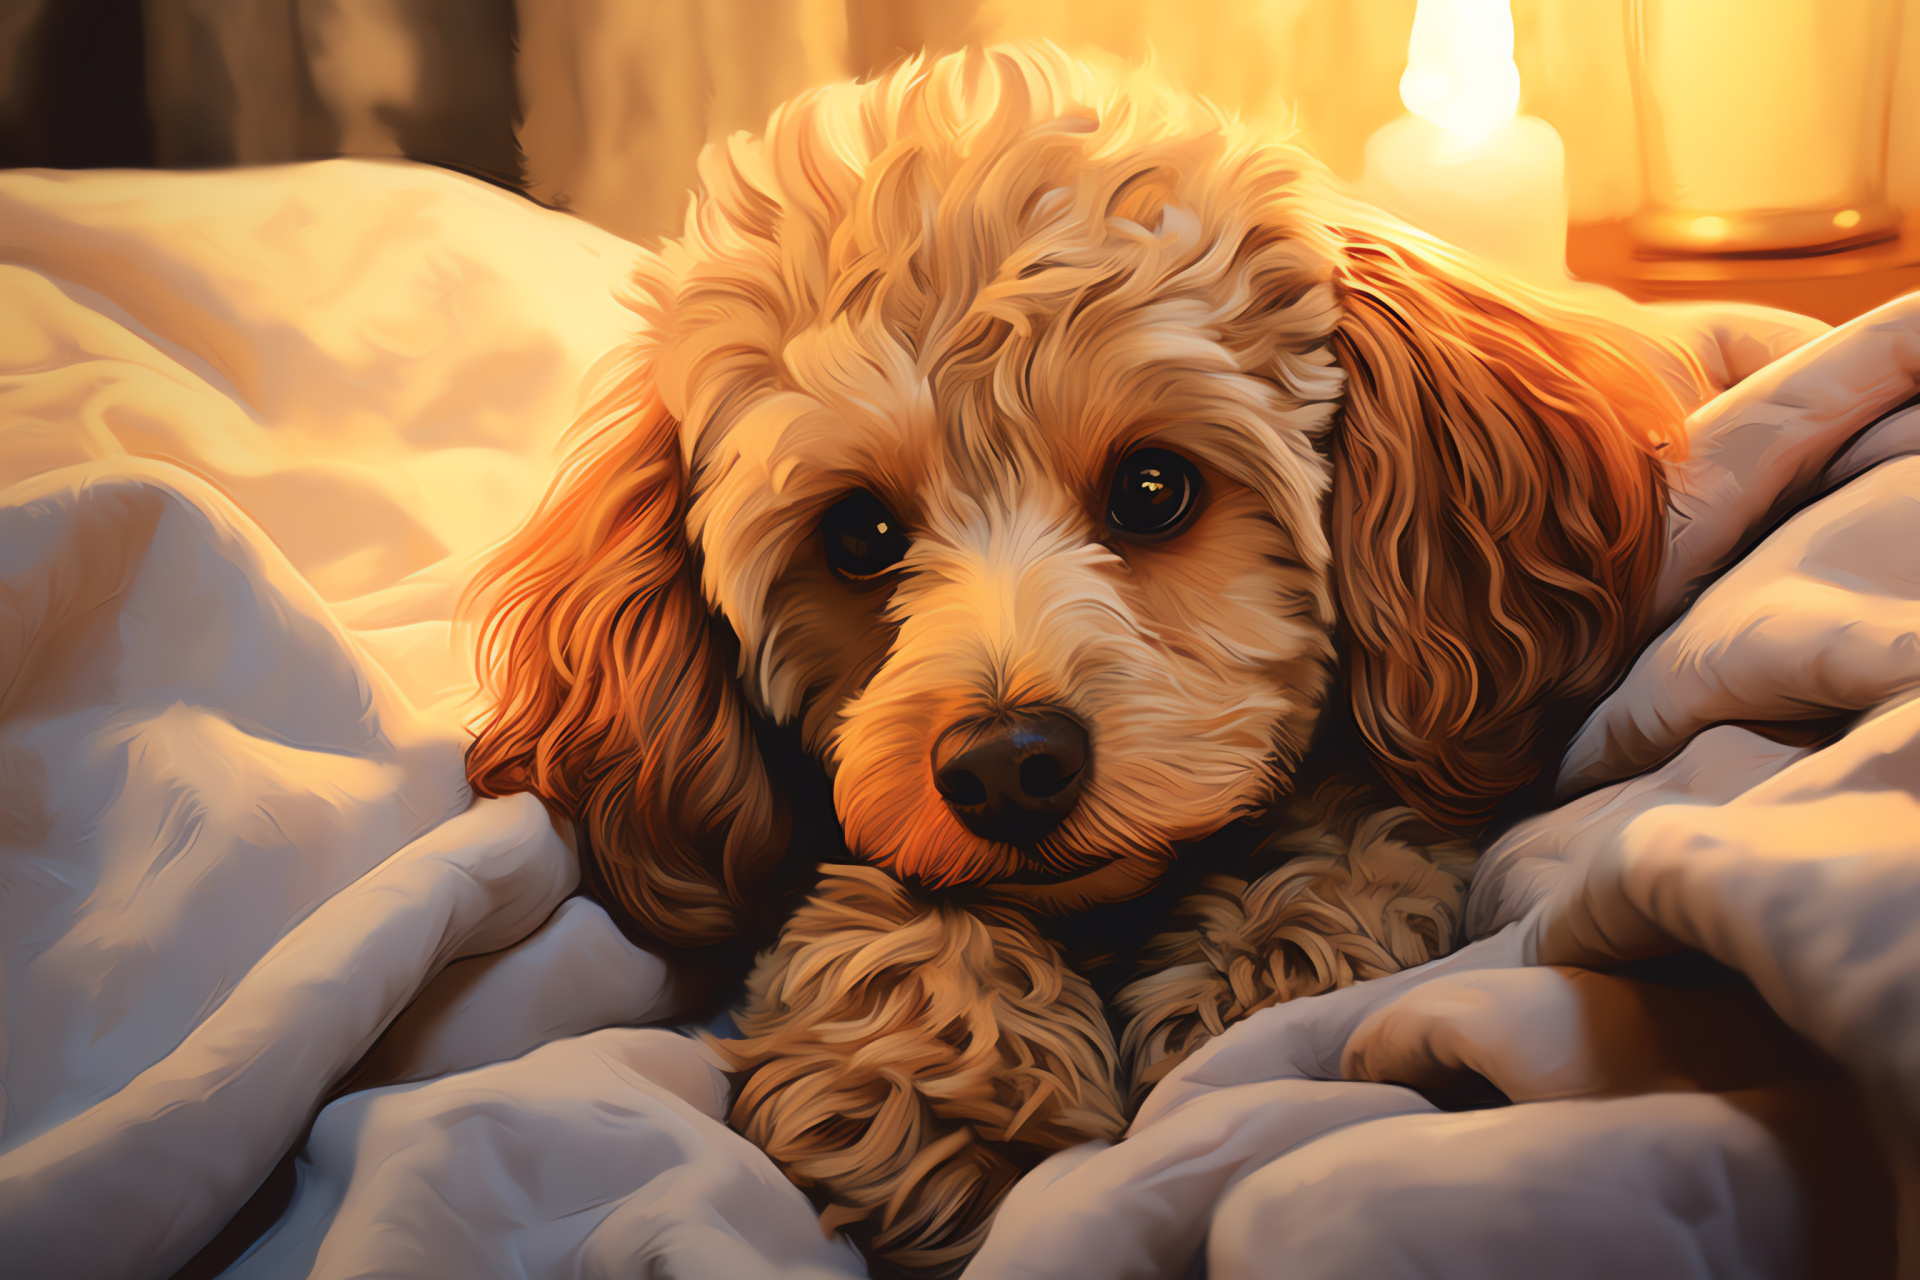 Poodle breed, cream fur, home pet, loyal companion, cozy domestic scene, HD Desktop Image